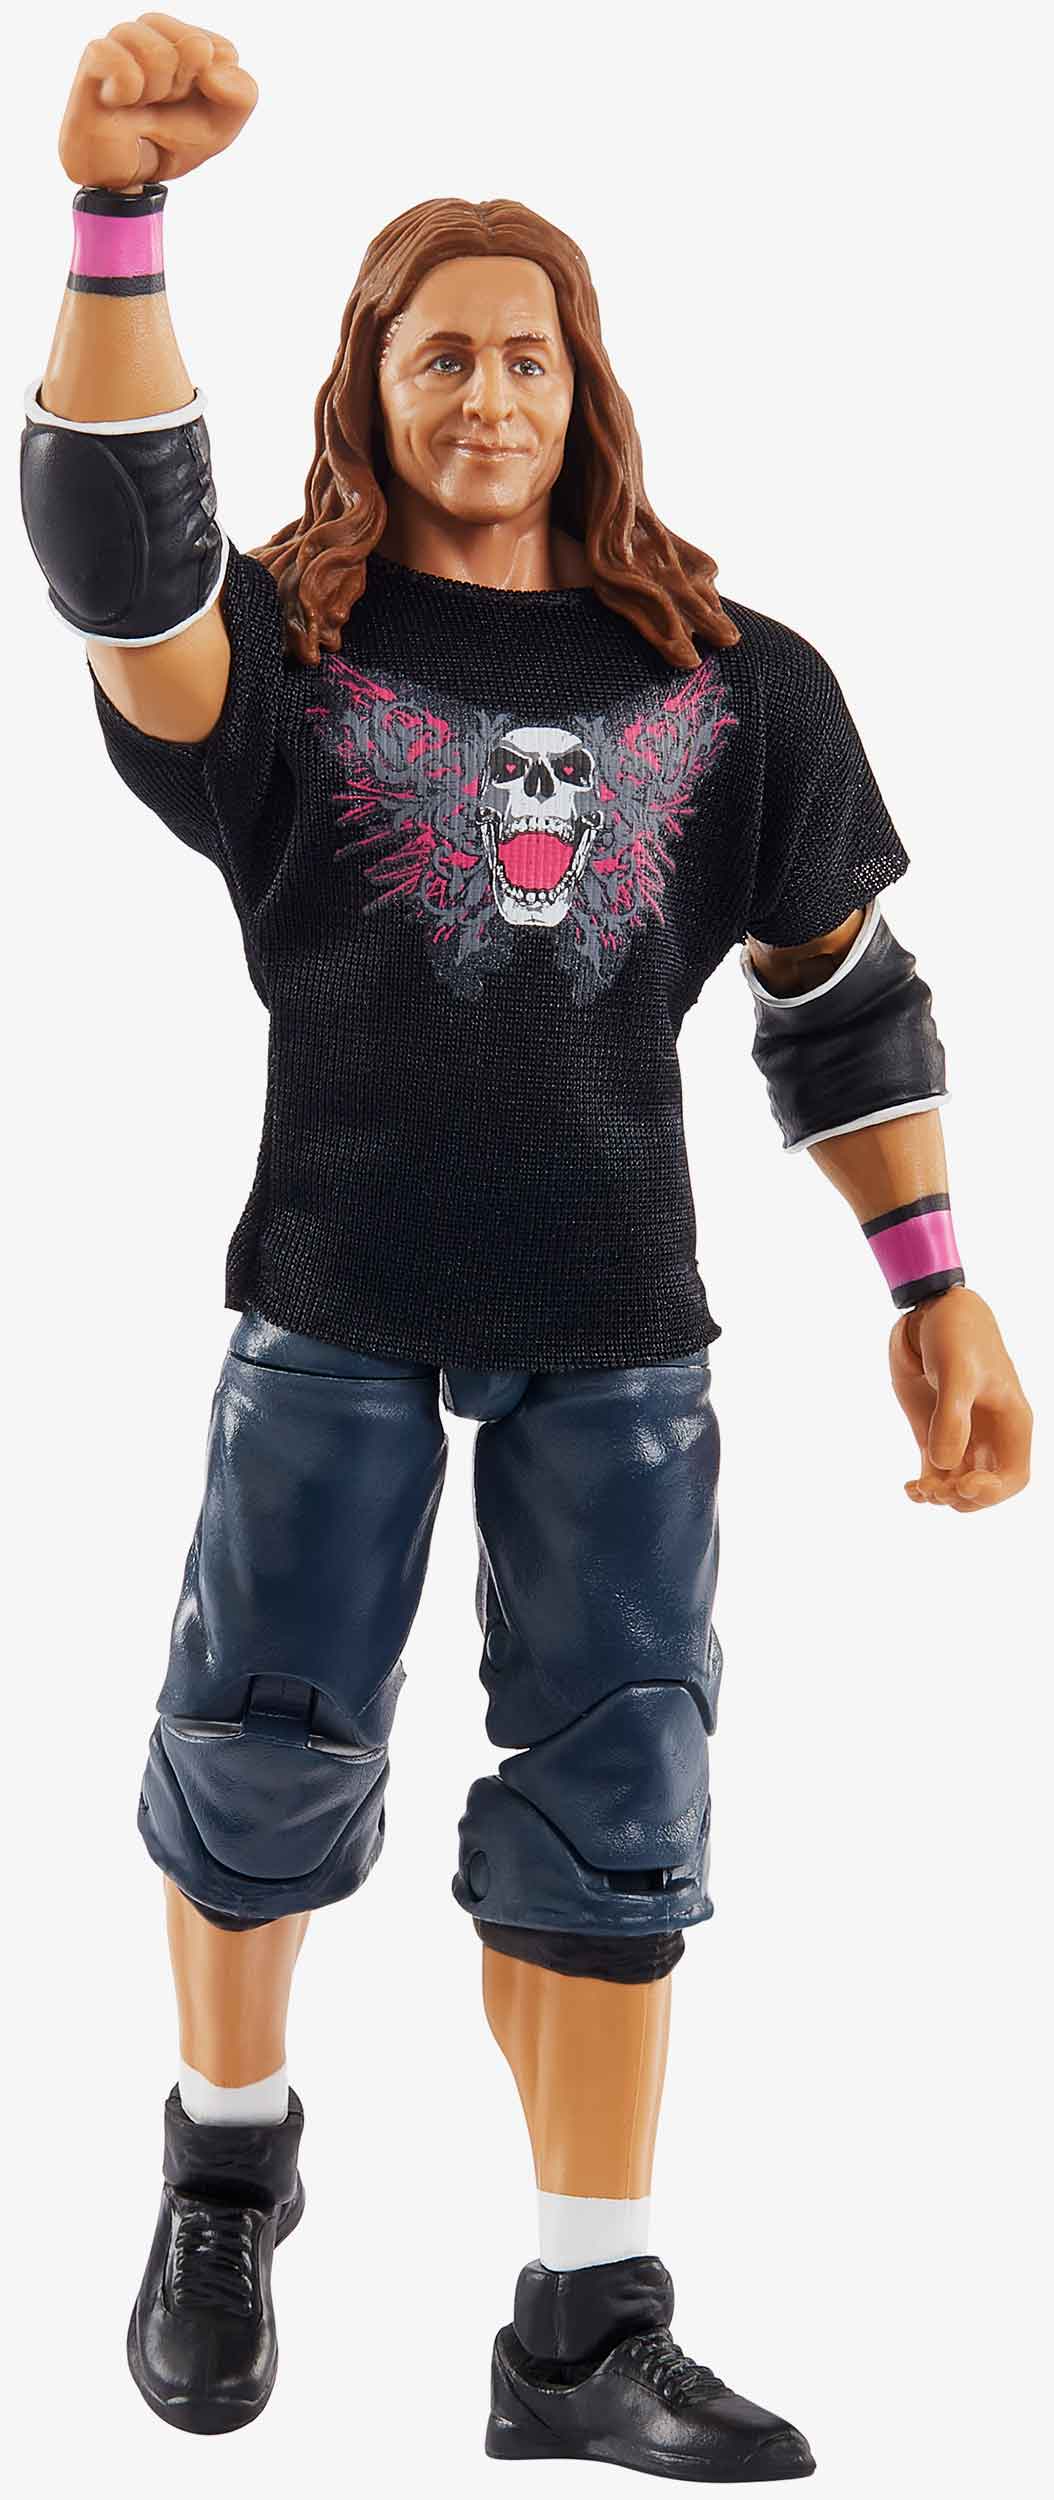 Bret Hit Man Hart WWE WrestleMania 38 Elite Collection